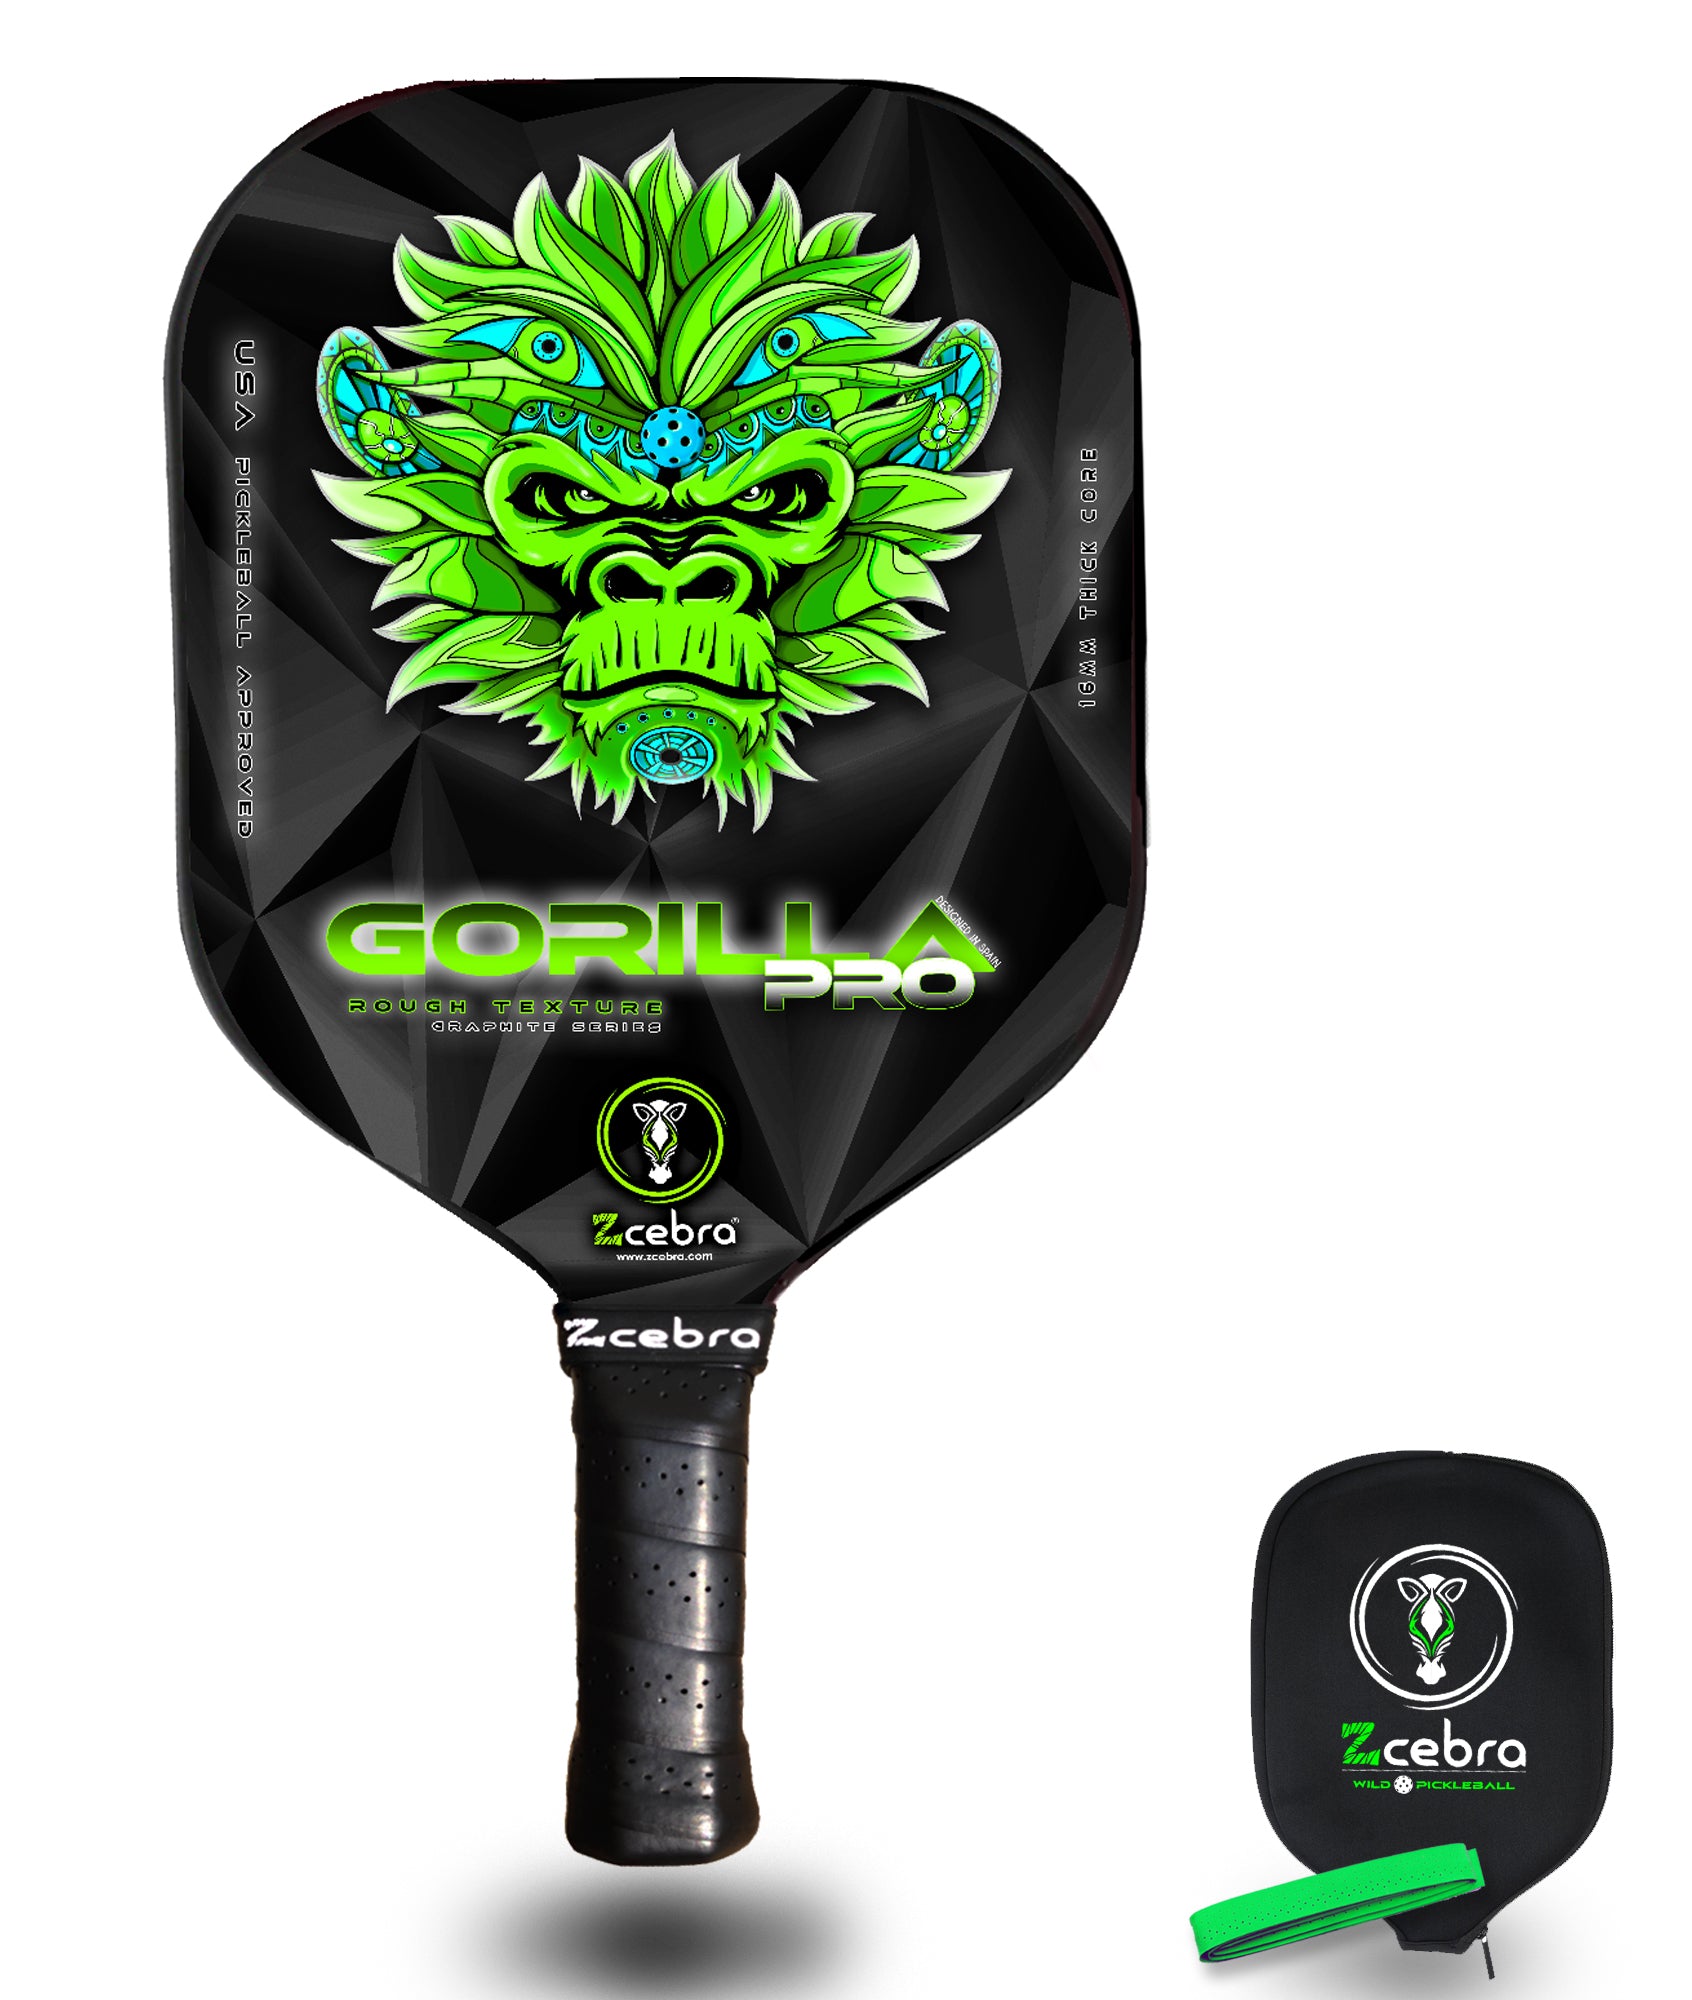 Zcebra Gorilla Pro Green/Black pickleball paddle